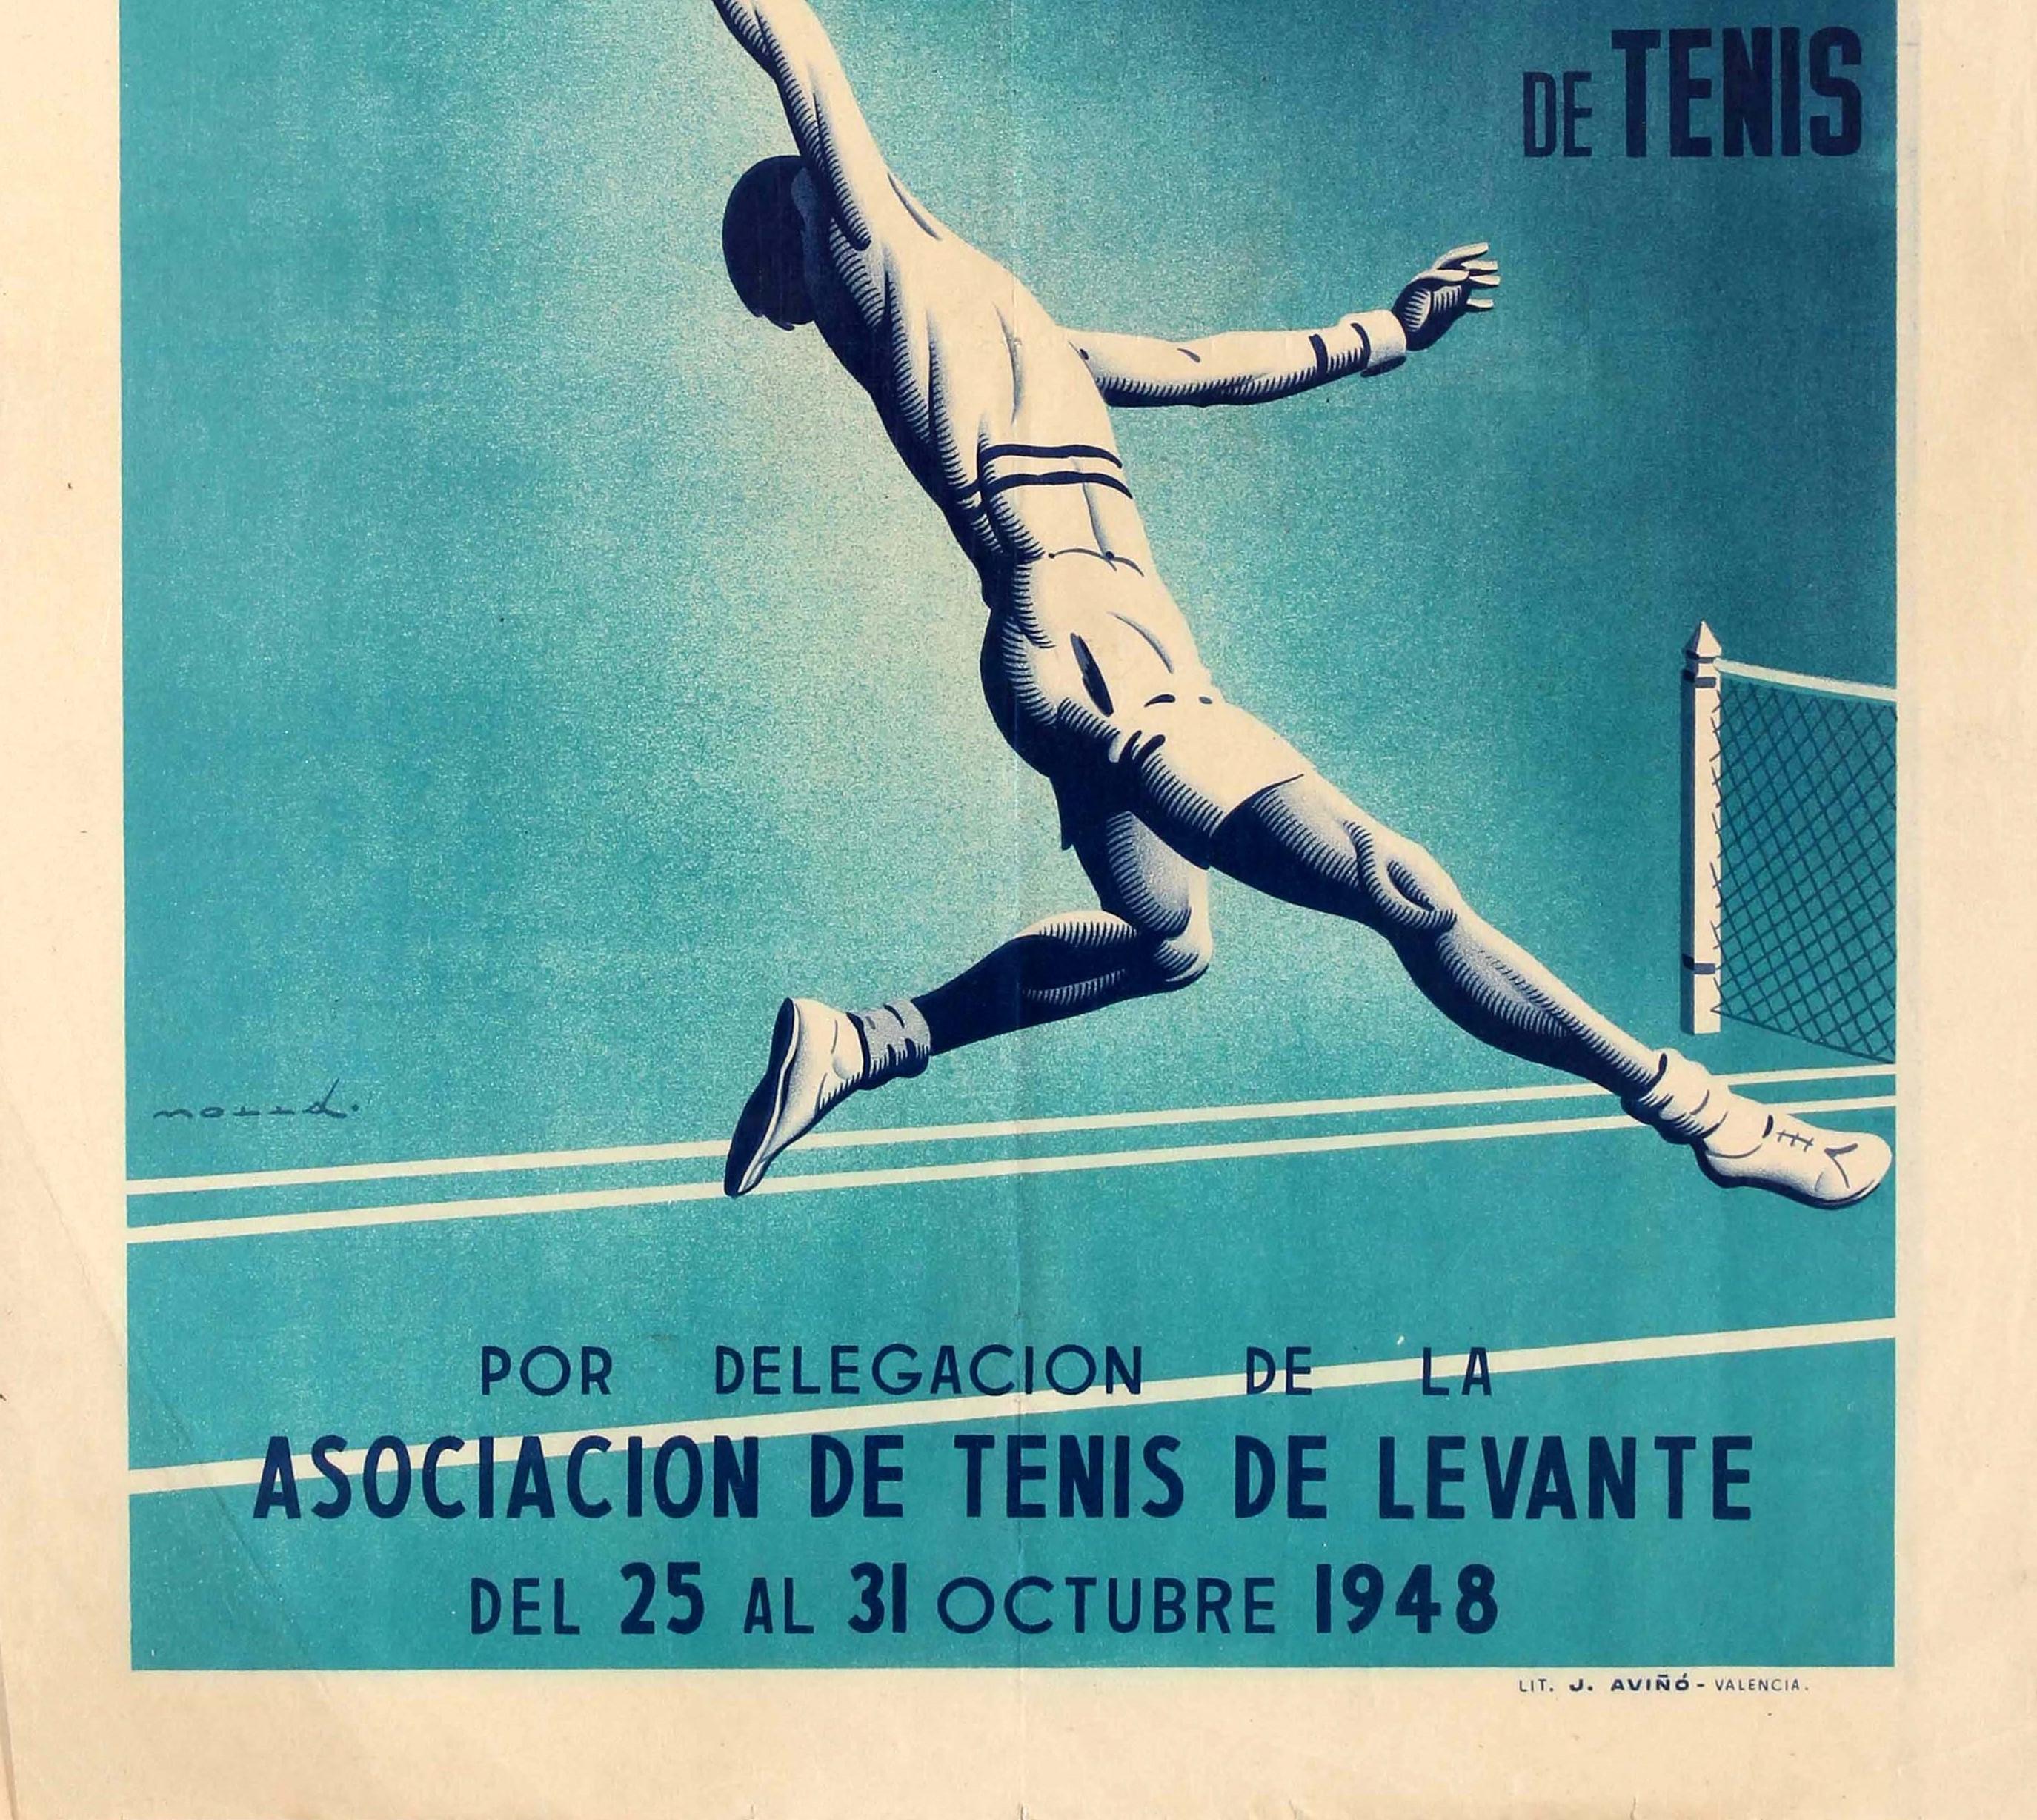 1970s tennis poster